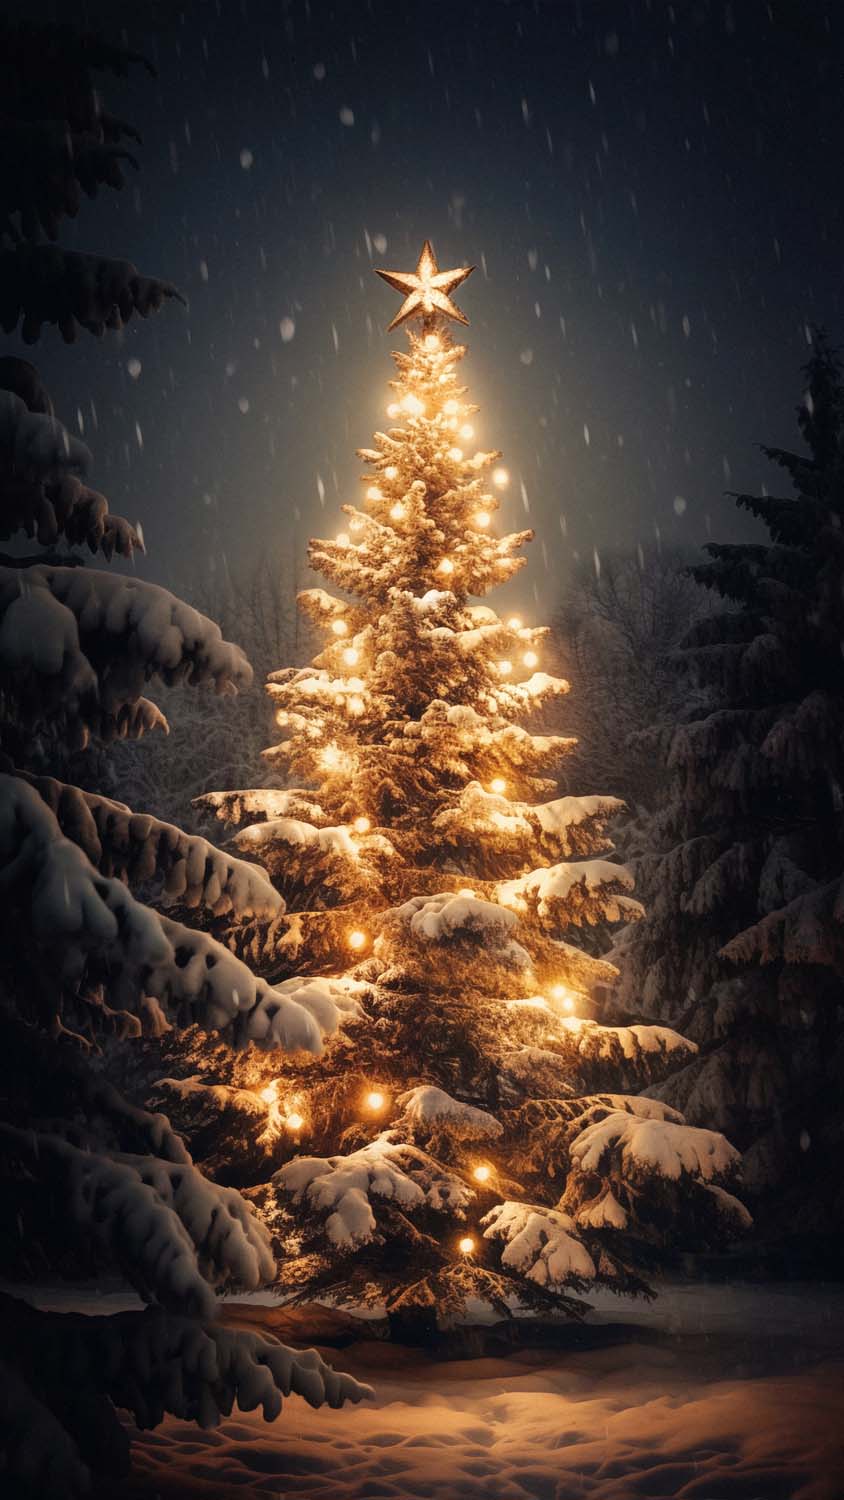 Christmas Tree iPhone Wallpaper